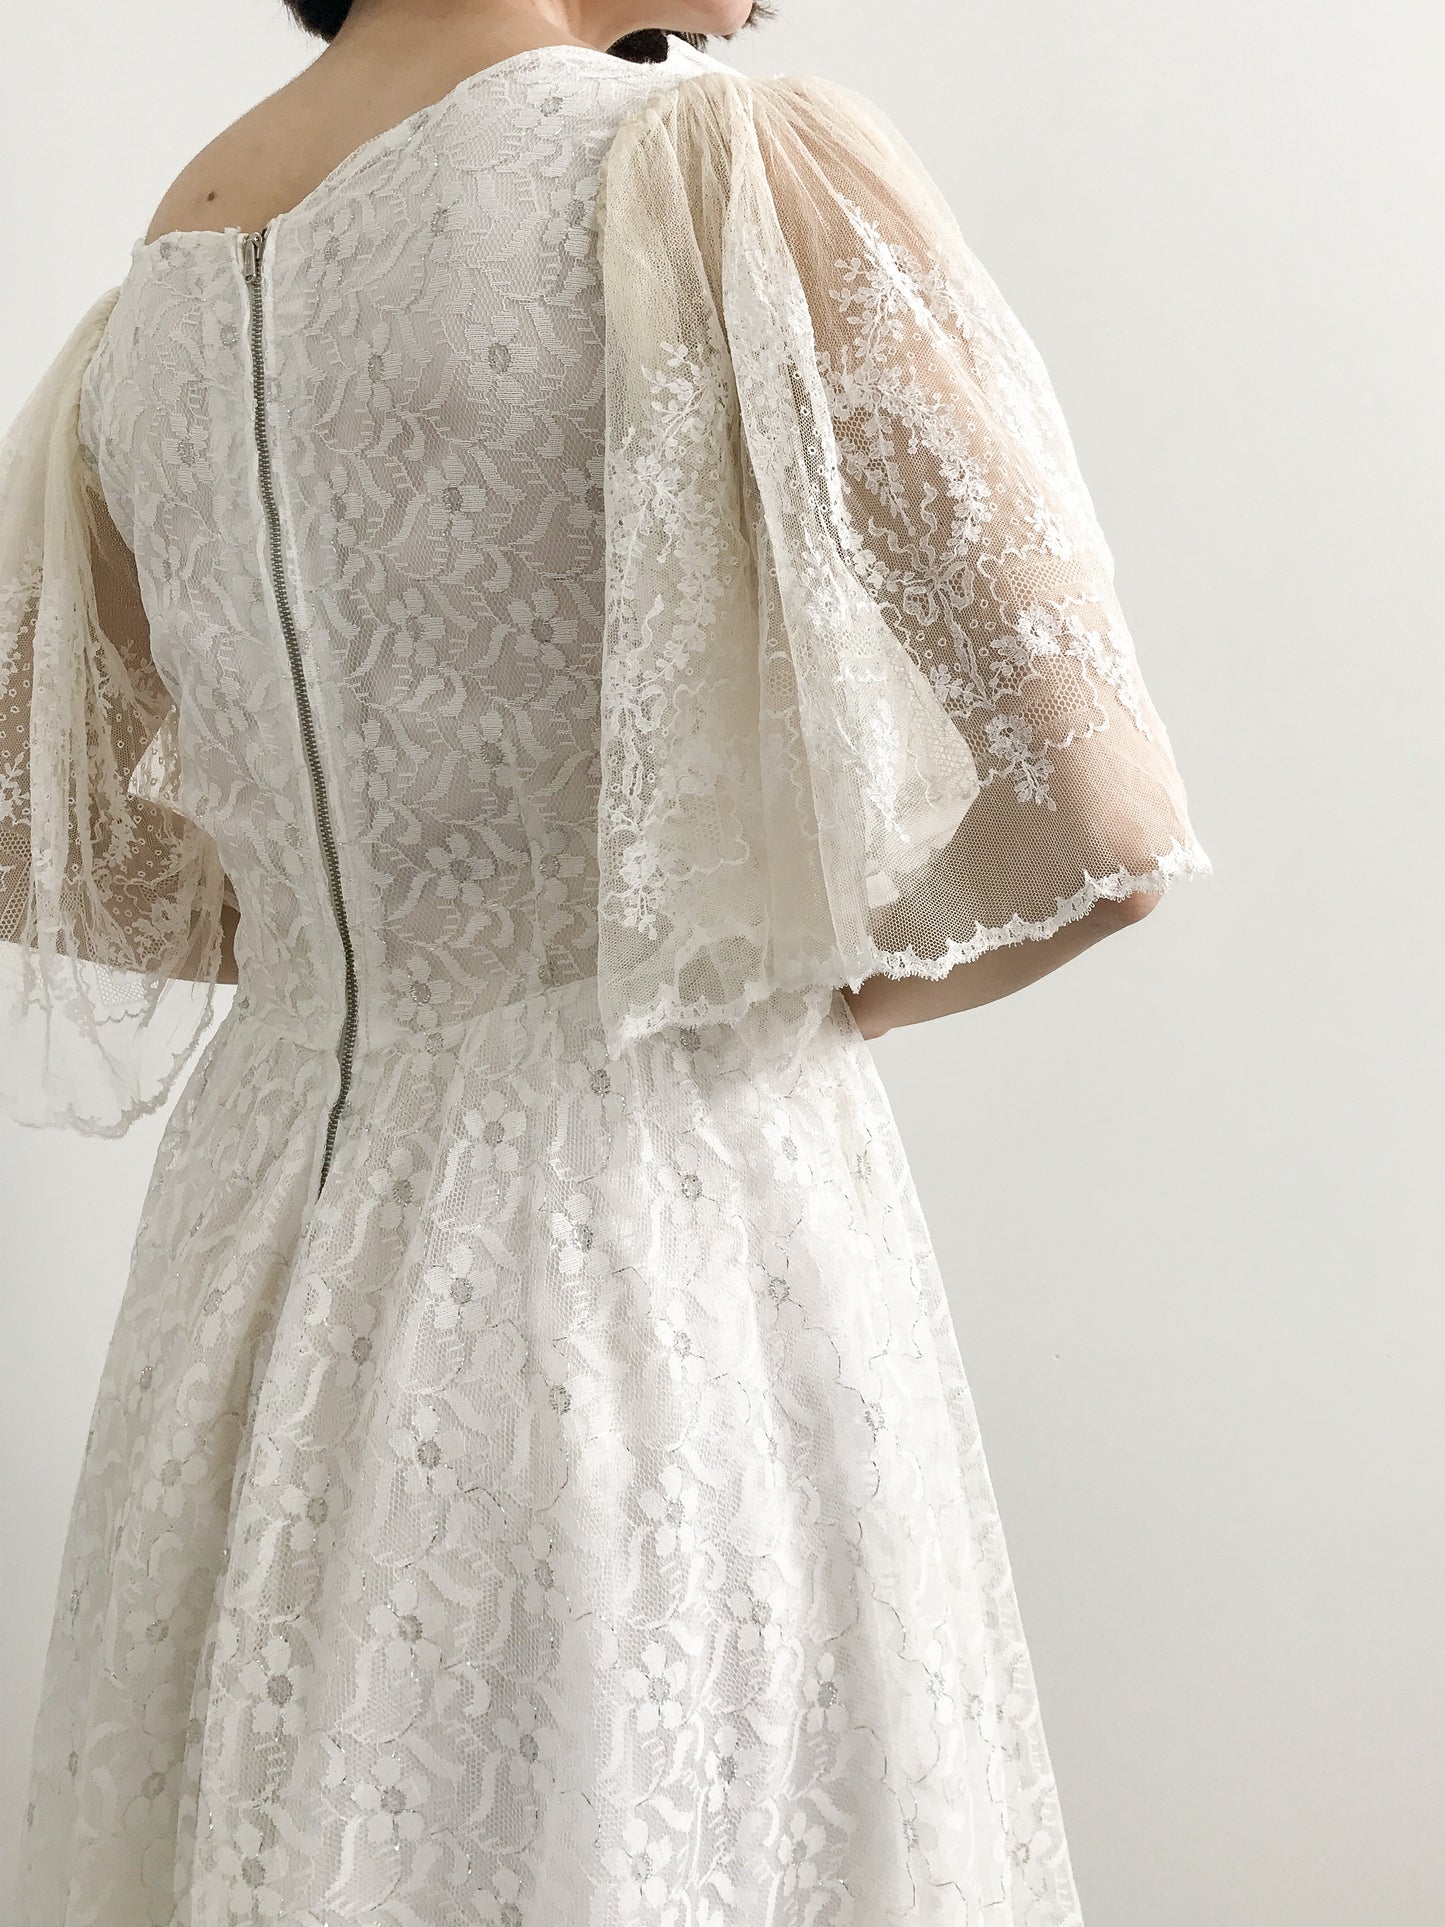 1940s Flutter Sleeve & Lace Wedding Dress